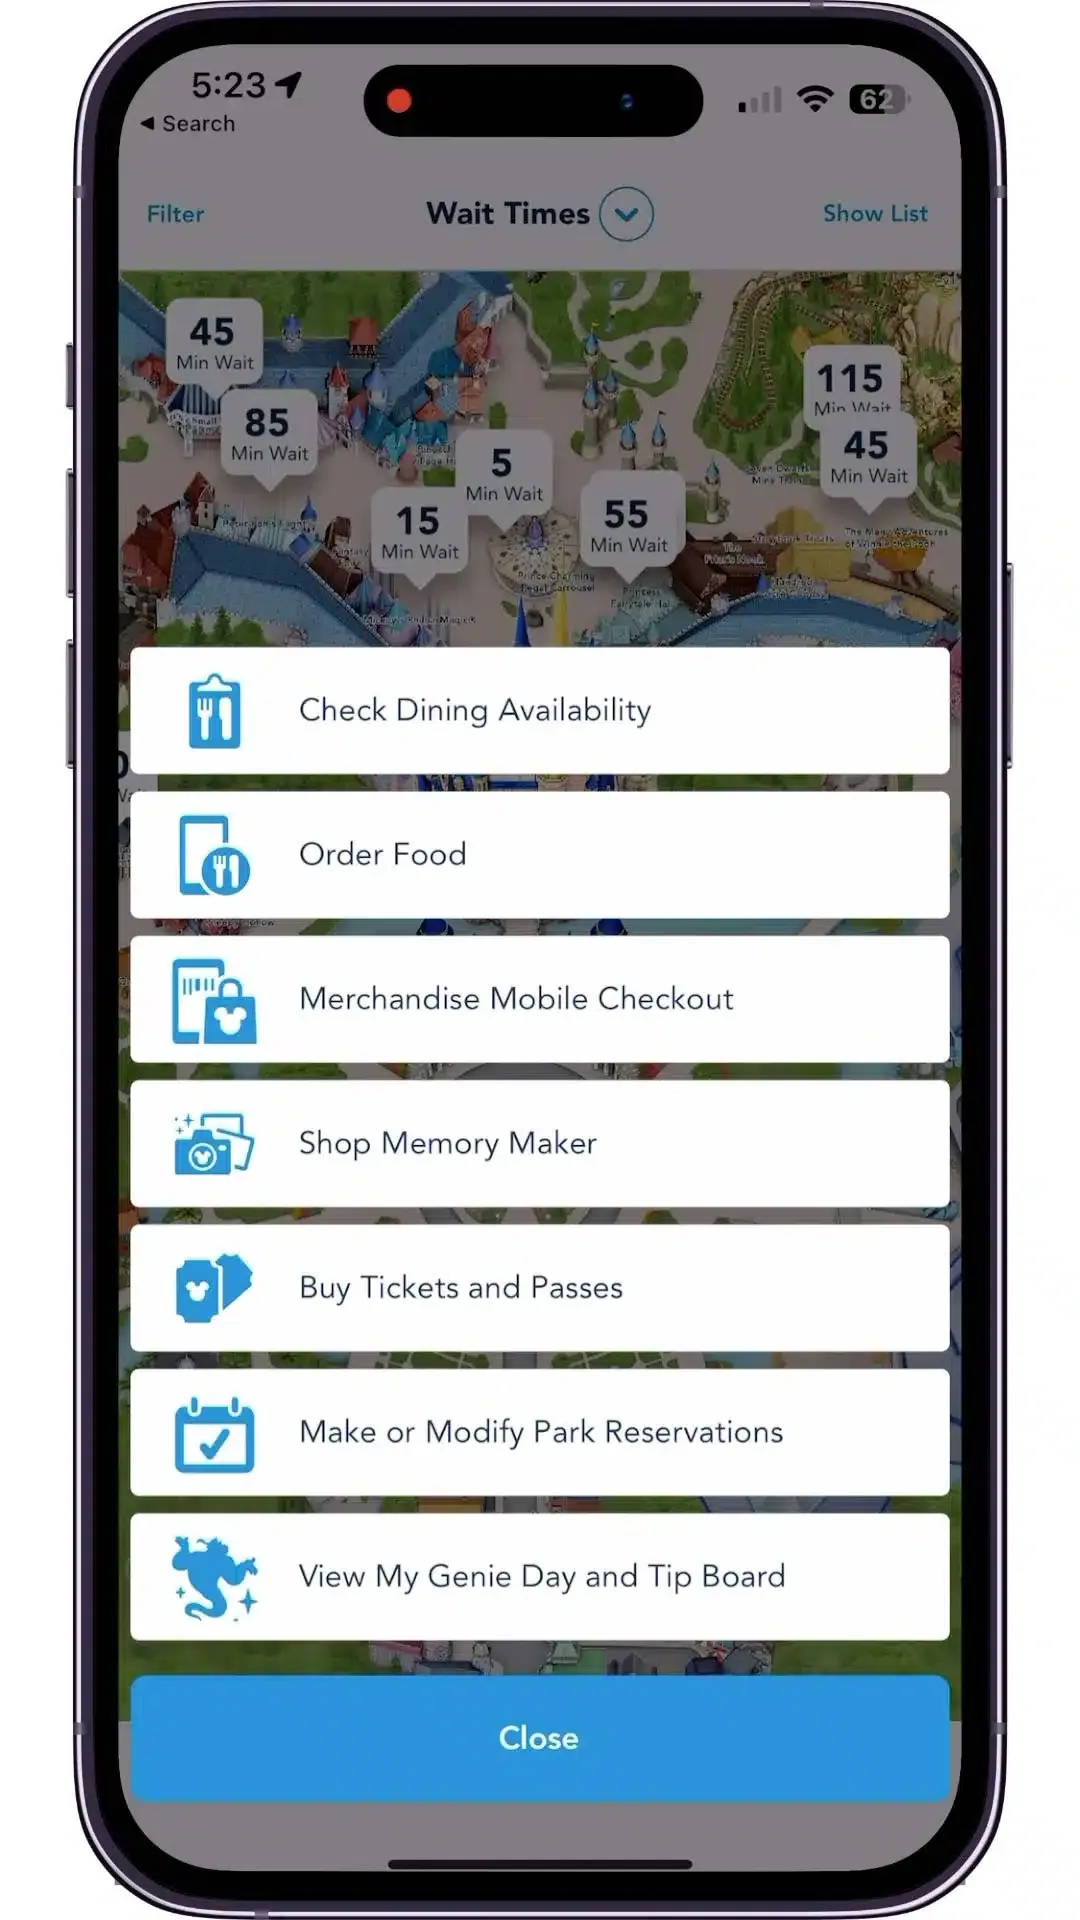 Check Dining Availability - Disney World App